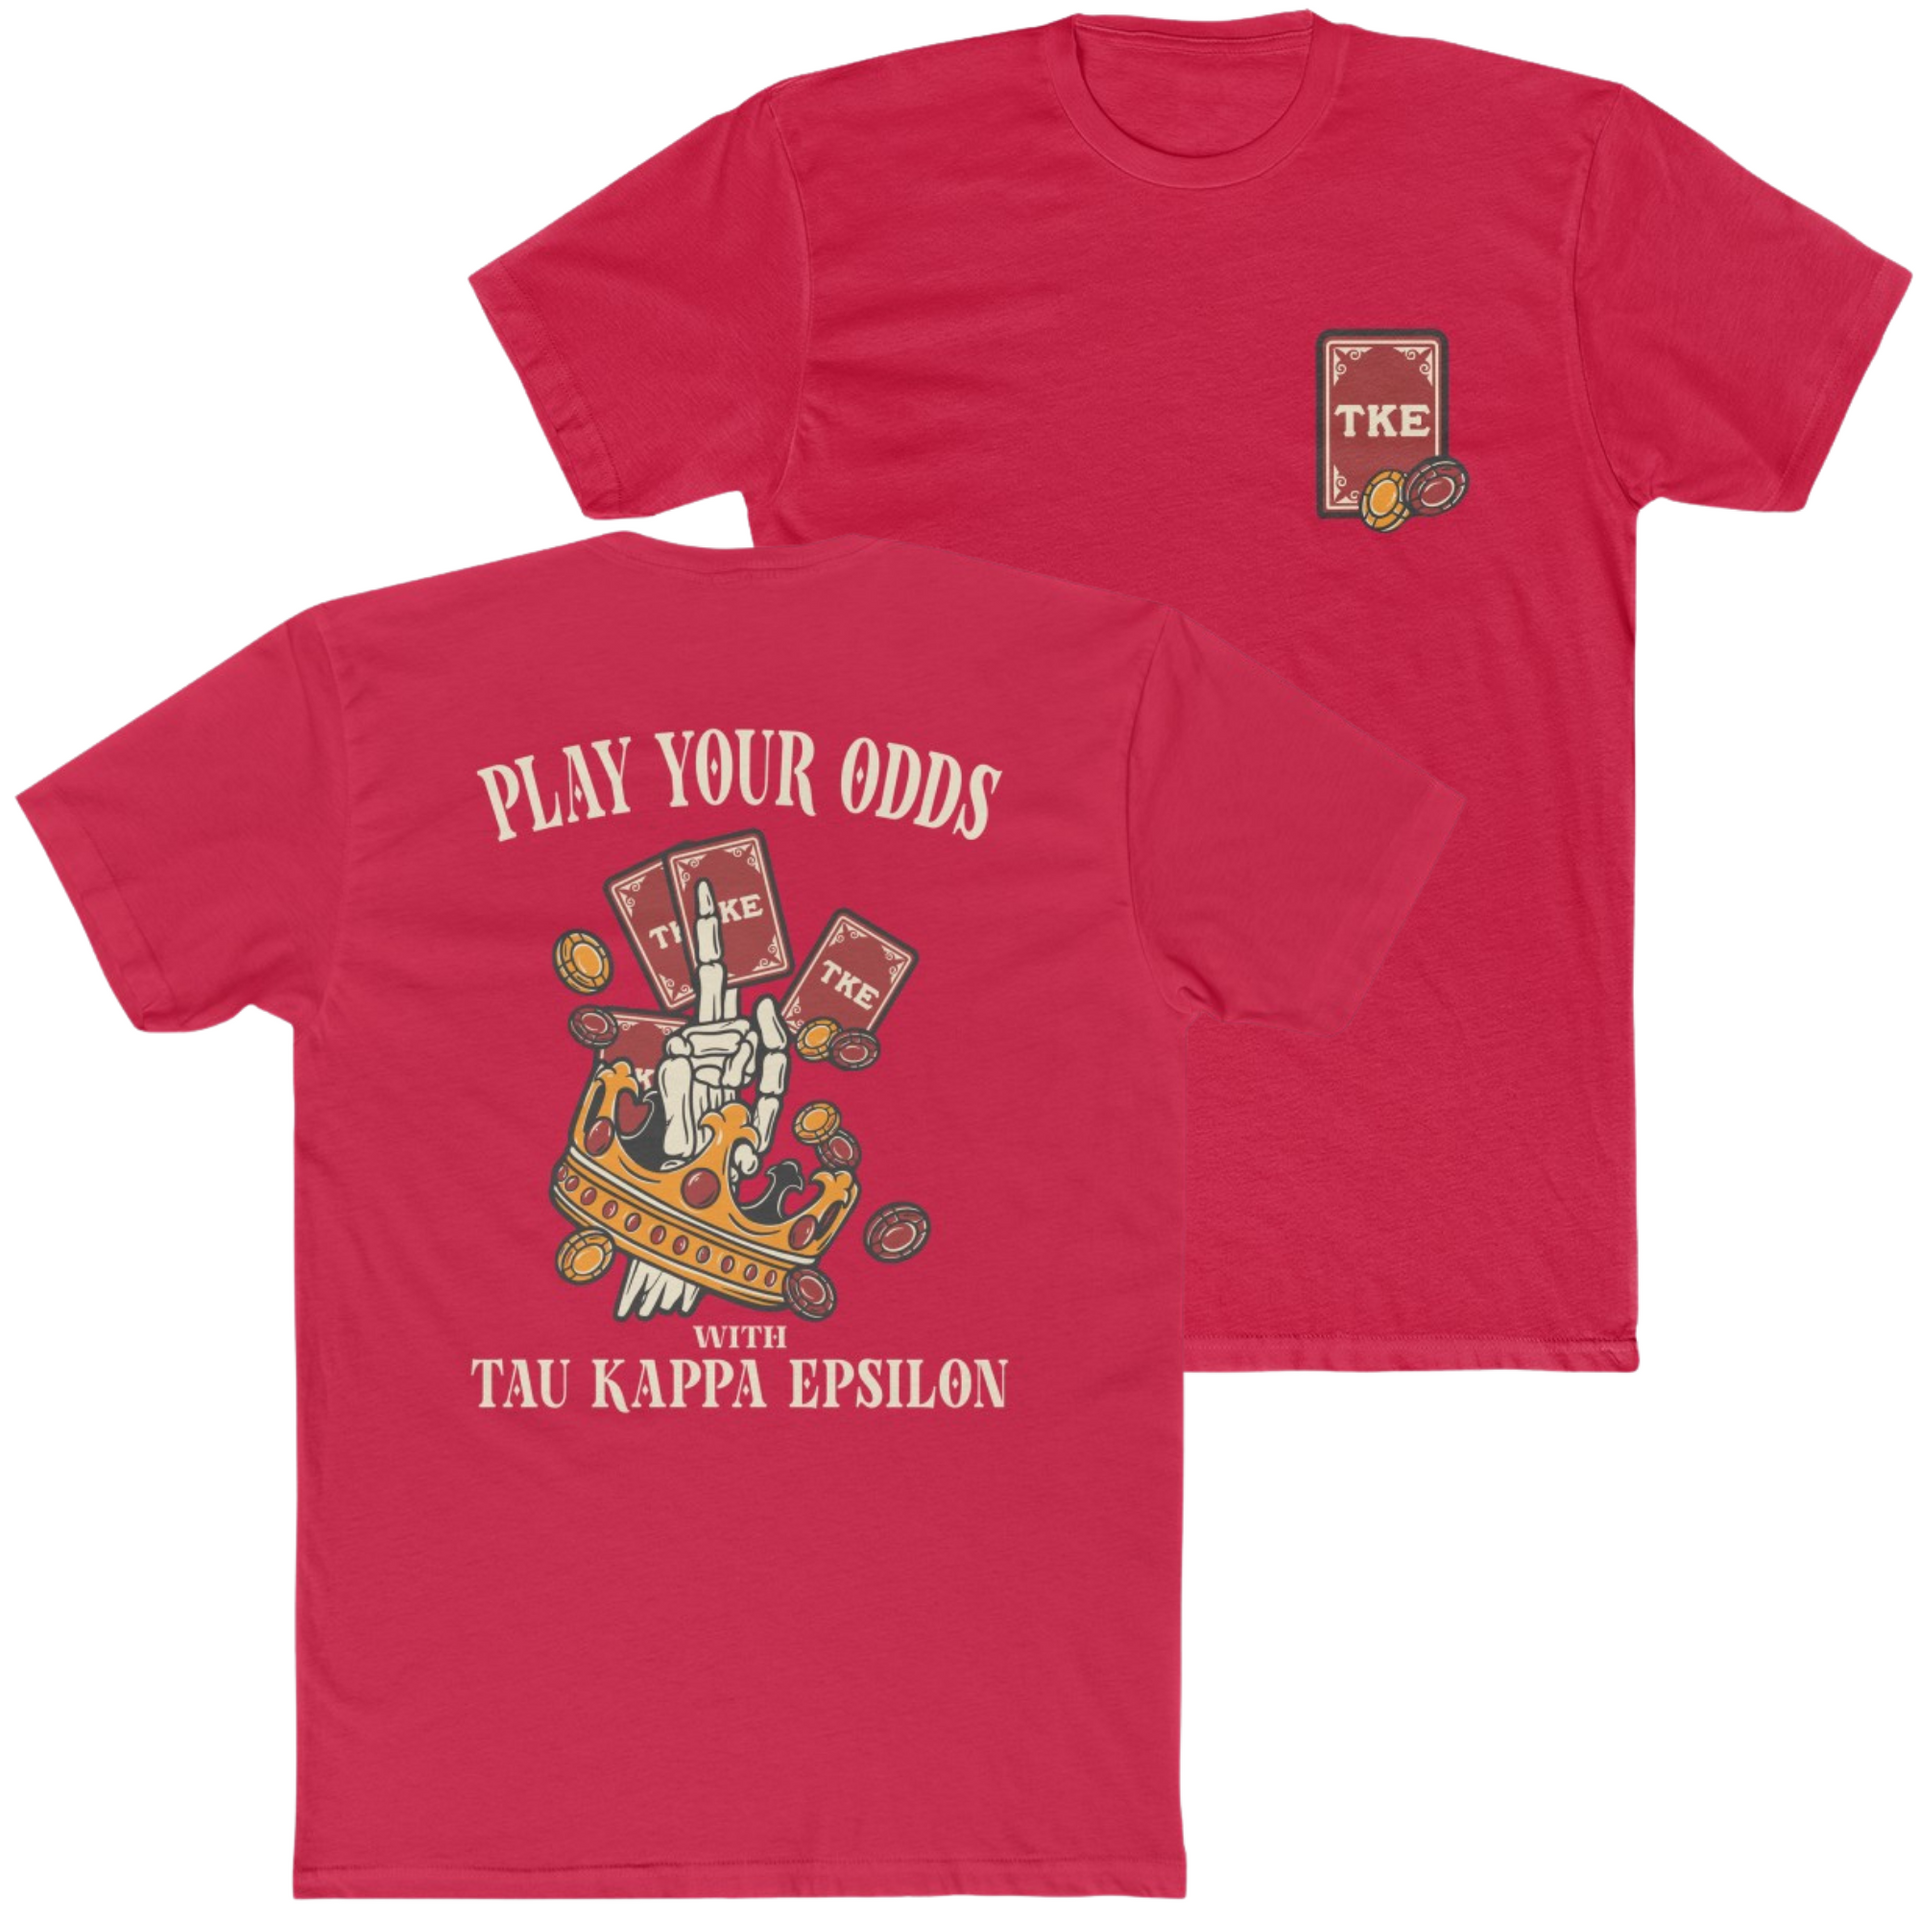 Red Tau Kappa Epsilon Graphic T-Shirt | Play Your Odds | Tau Kappa Epsilon Fraternity